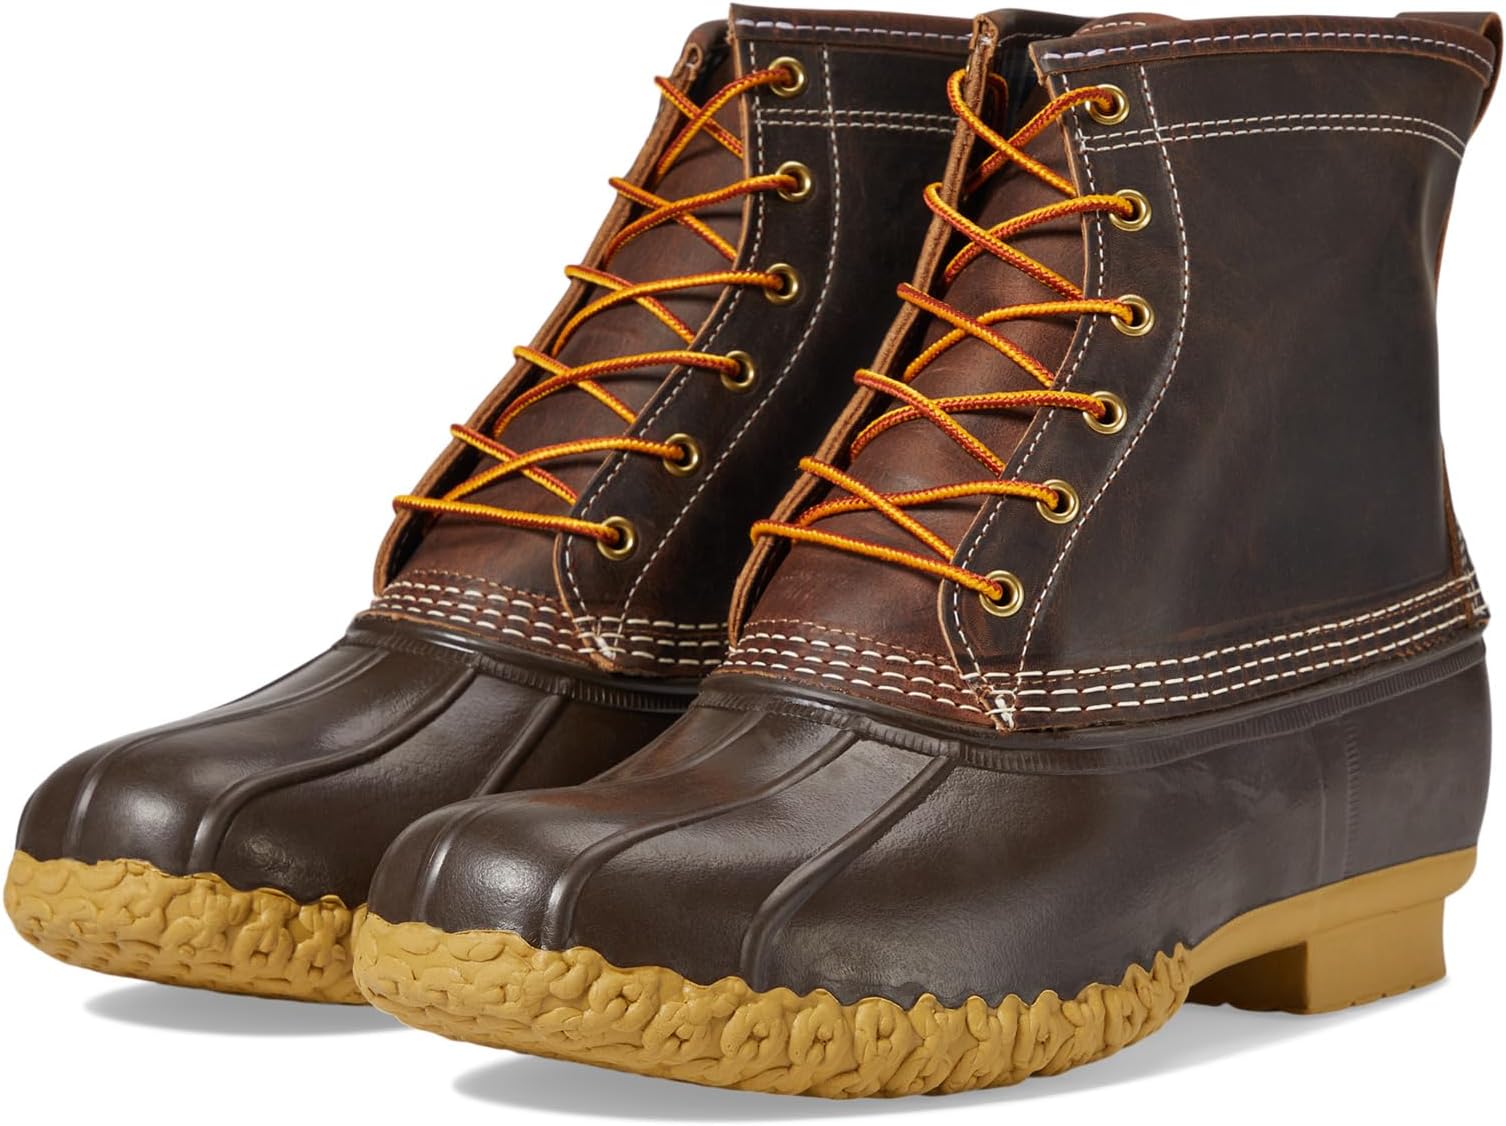 Зимние ботинки Bean Boot 8 Leather Primaloft Flannel Lined L.L.Bean, цвет Classic Brown/Bean Boot Brown/Gum/Iron резиновая обувь viking полусапоги classic kids boot